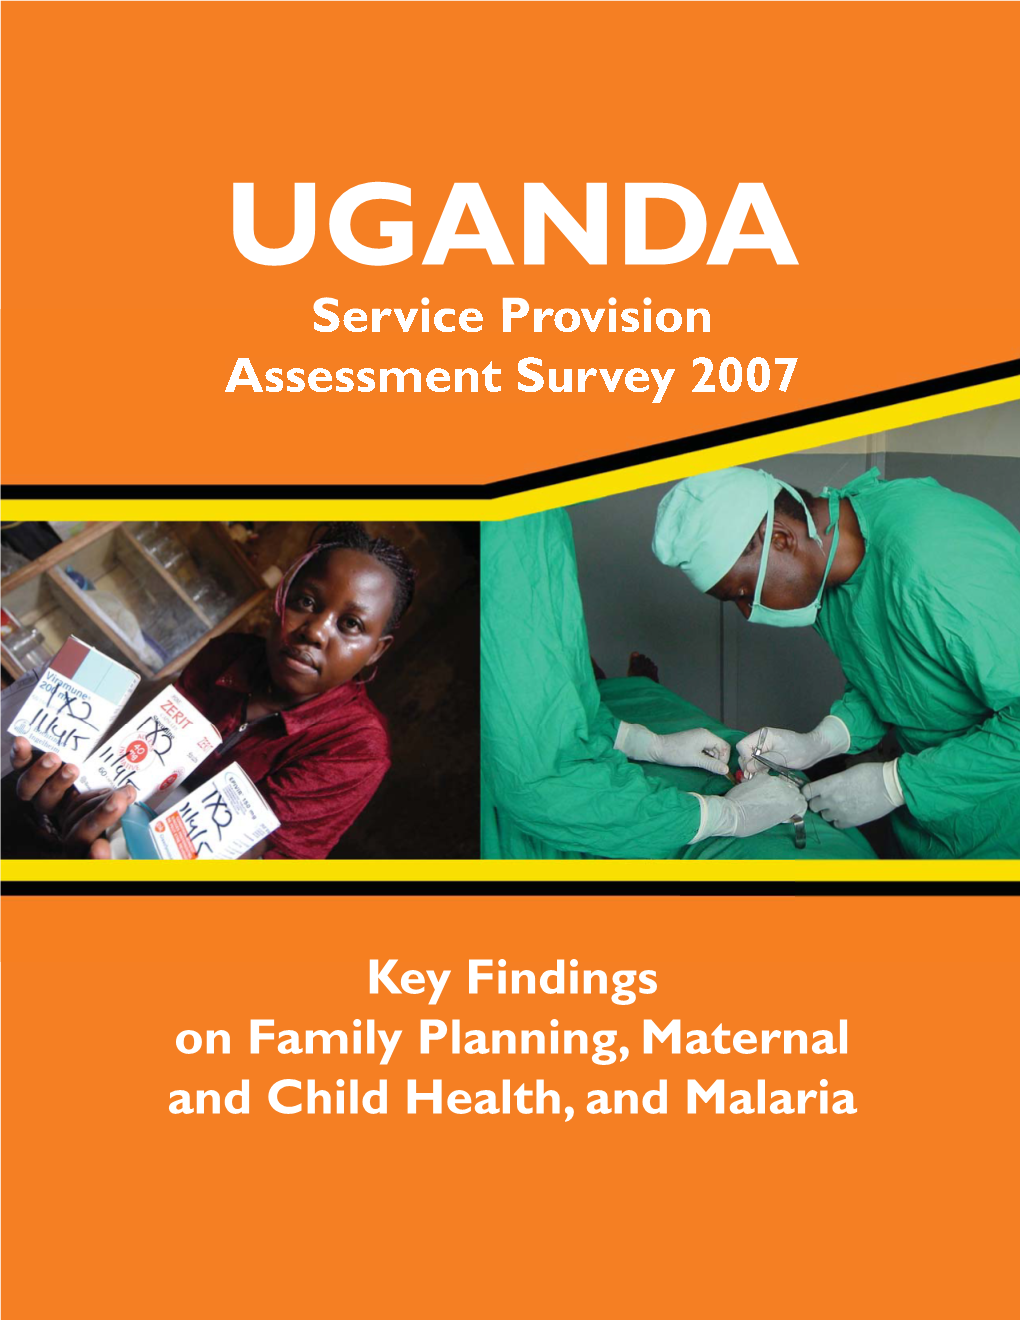 UGANDA Service Provision Assessment Survey 2007